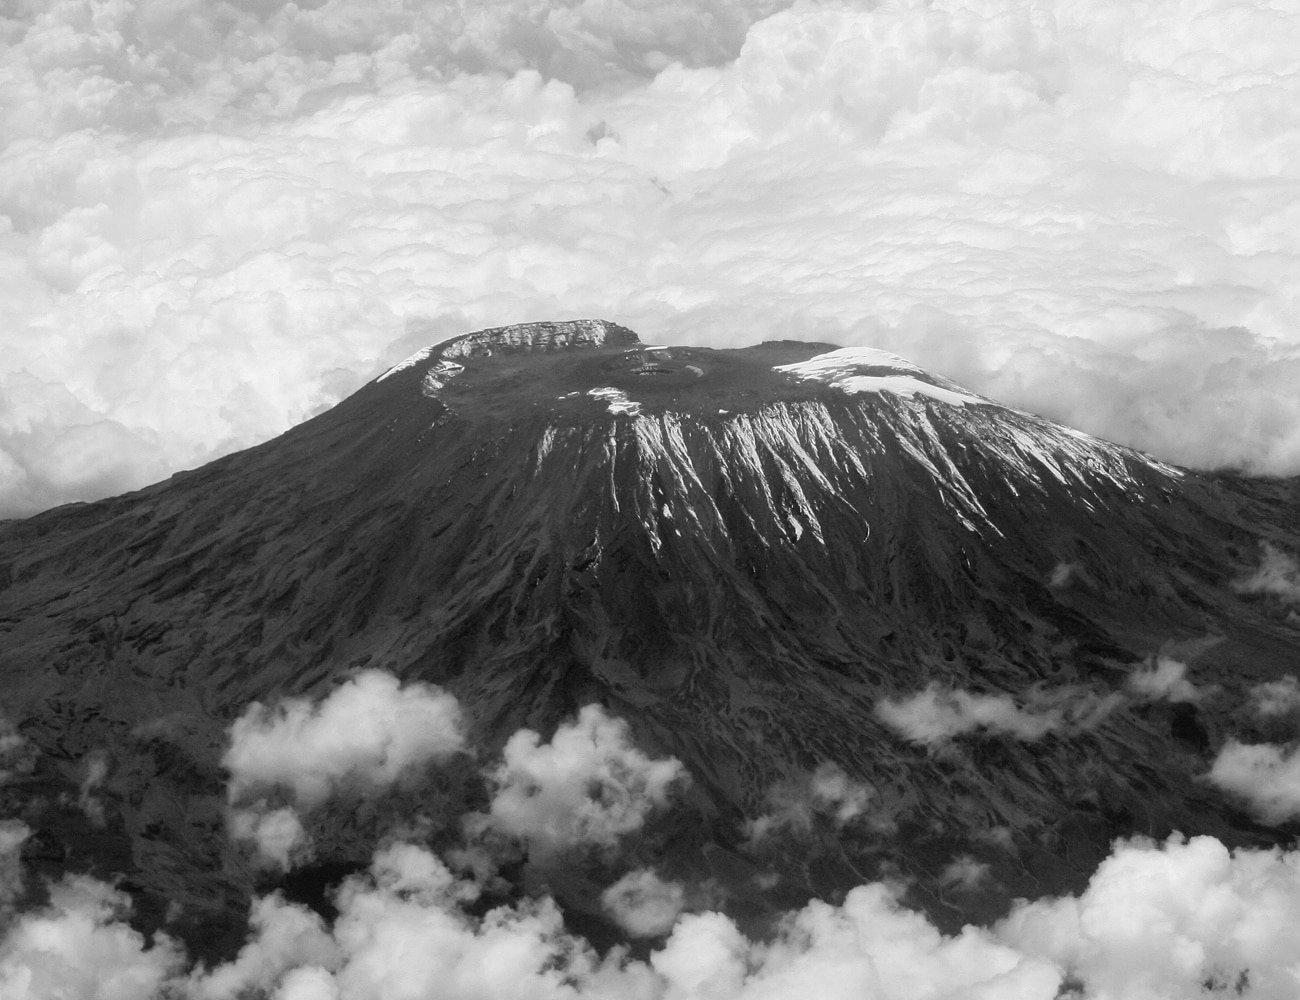 The highest Peak in Africa, Mount Kilimanjaro